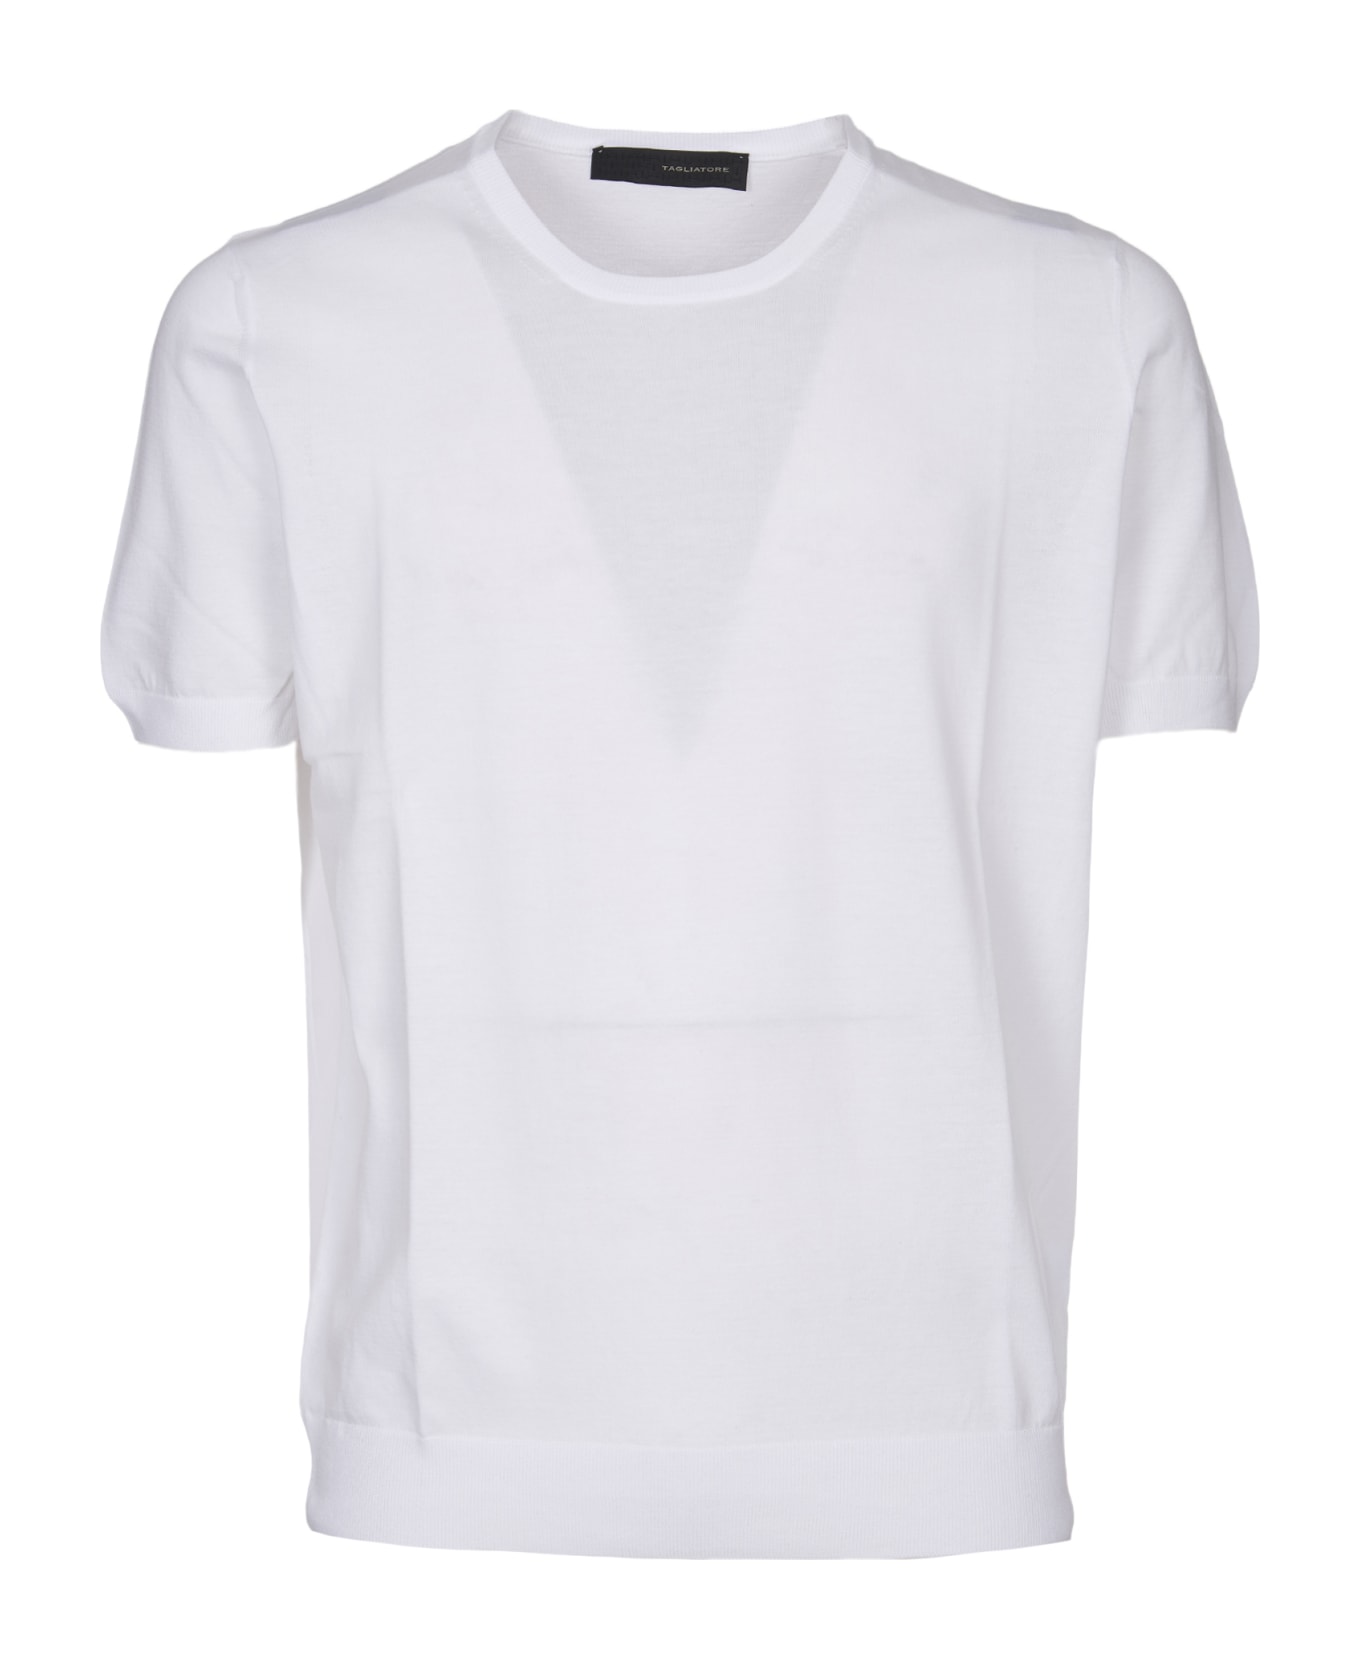 Tagliatore T-shirt - White シャツ